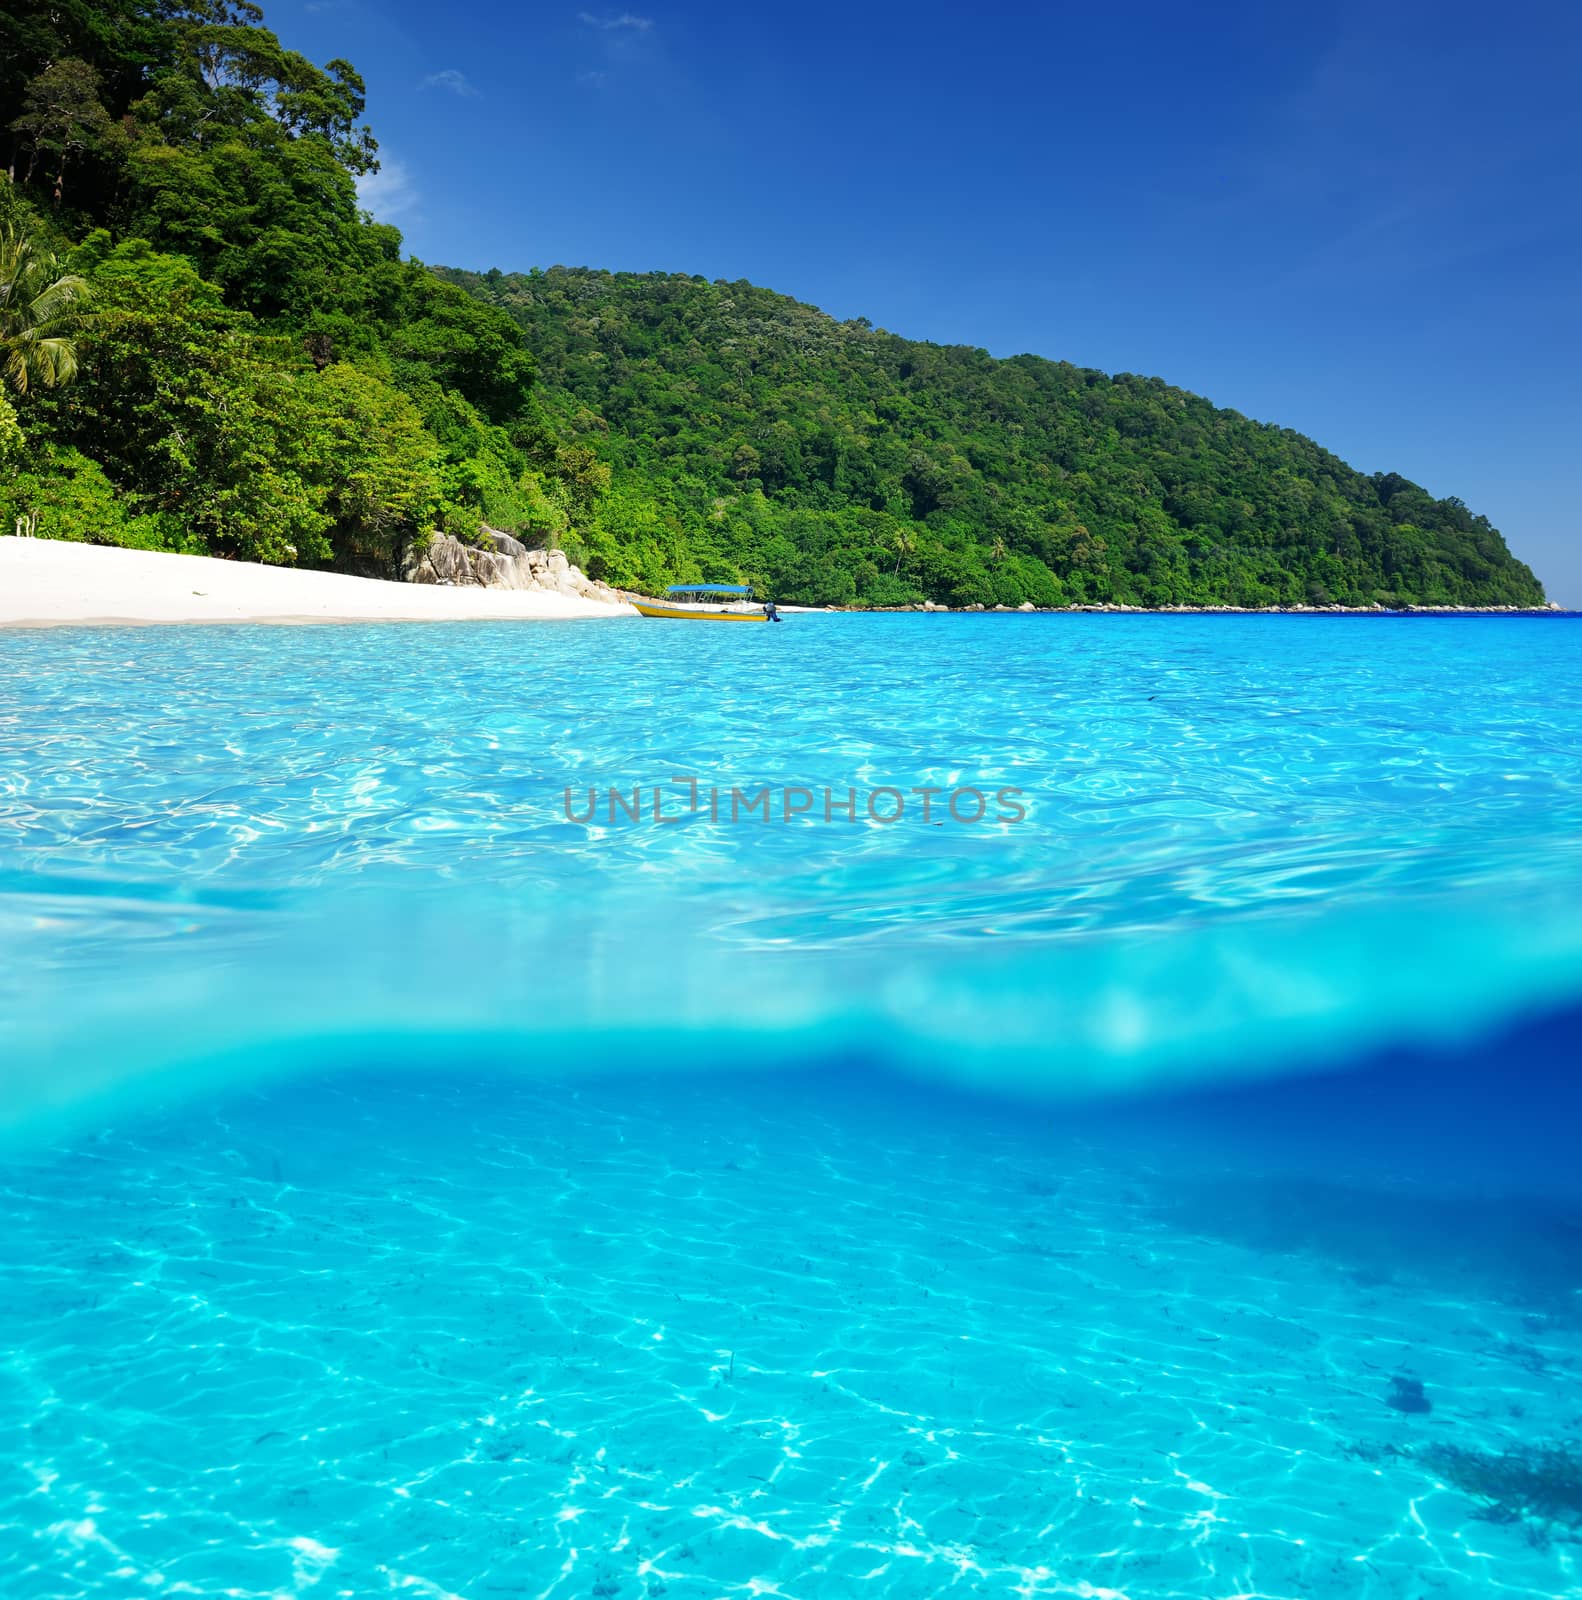 Beach with white sand bottom underwater view by haveseen